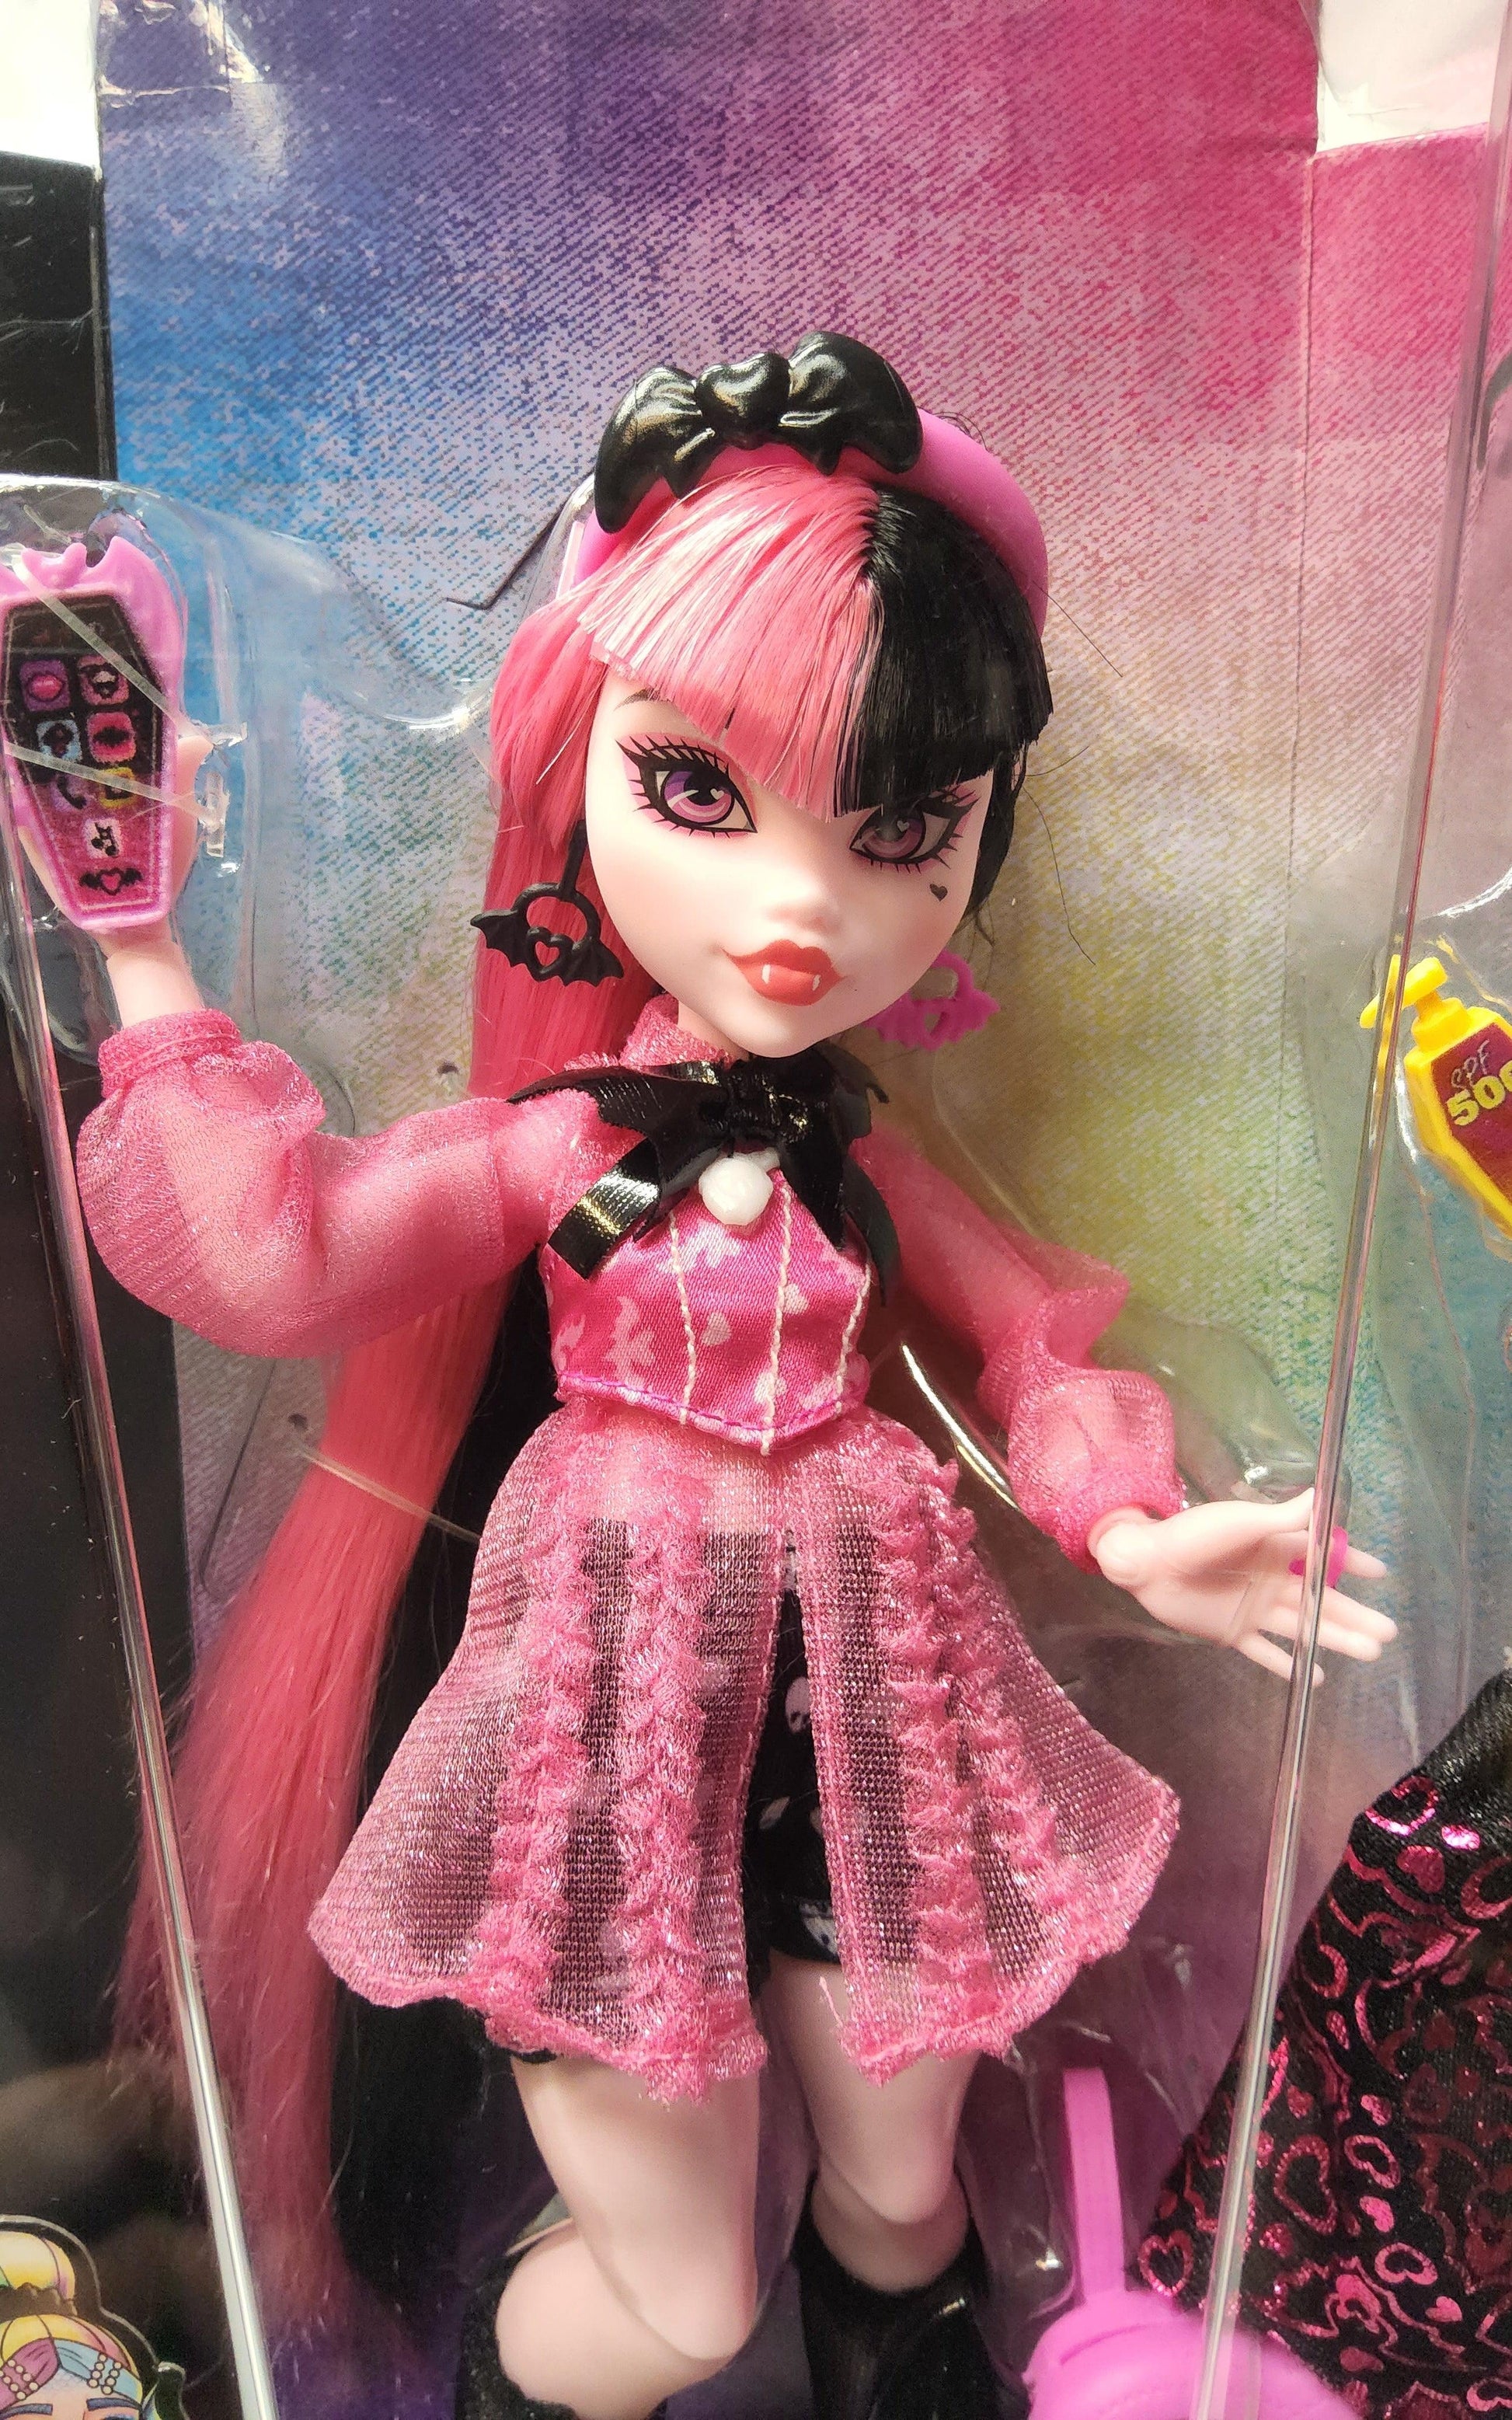 Monster High Draculaura Fashion Doll & Accessories